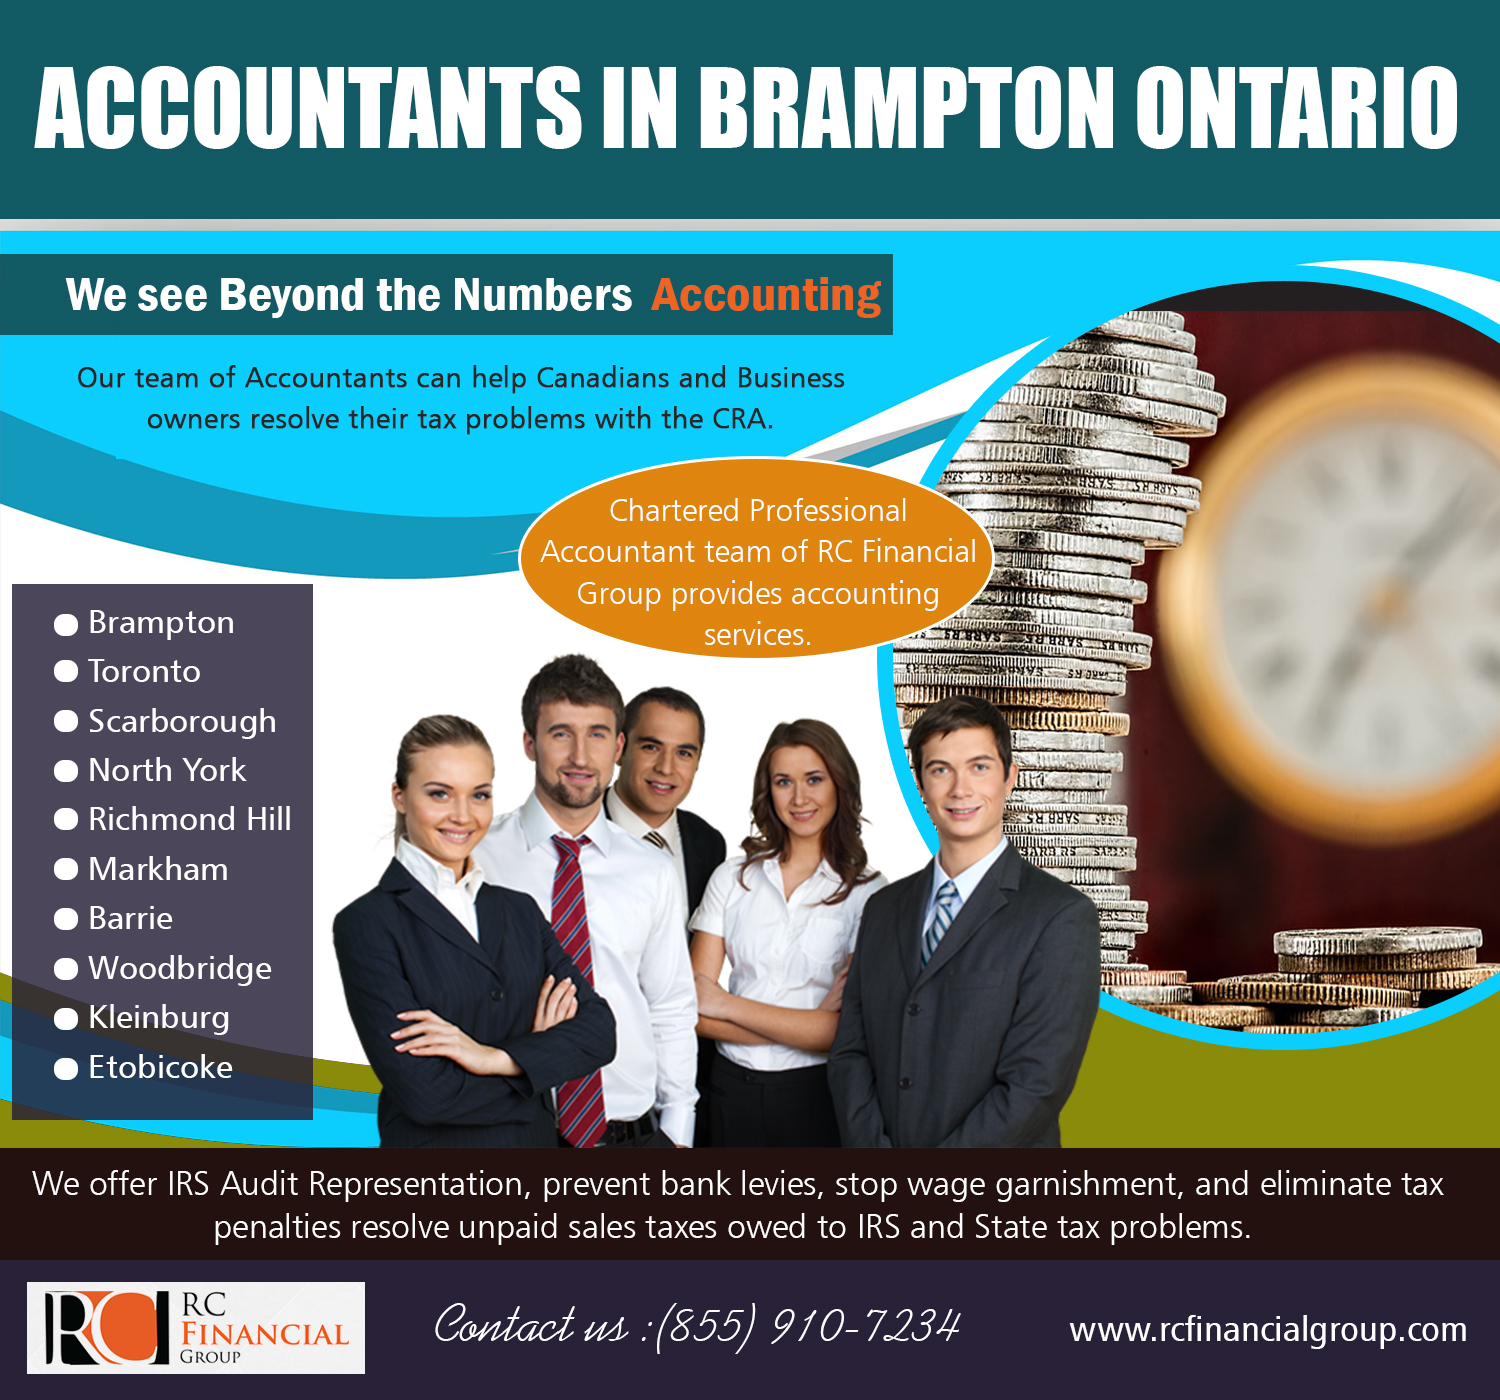 Accountants in Brampton Ontario | 8559107234 | rcfinancialgroup.com